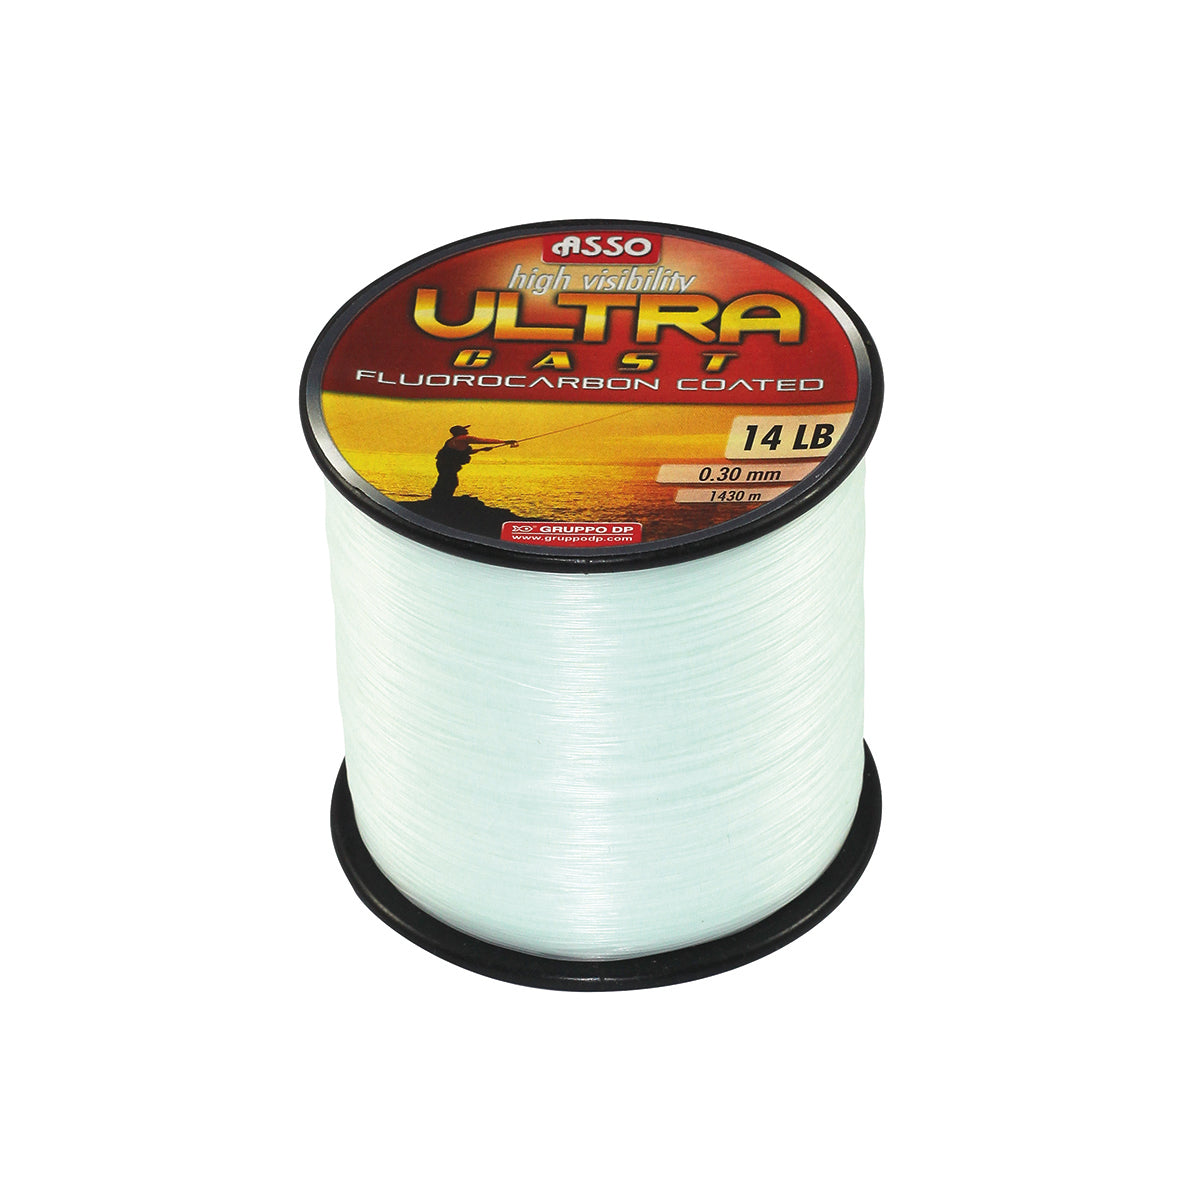 ASSO Ultra Cast Fluorocarbon Fishing Line 10LB white